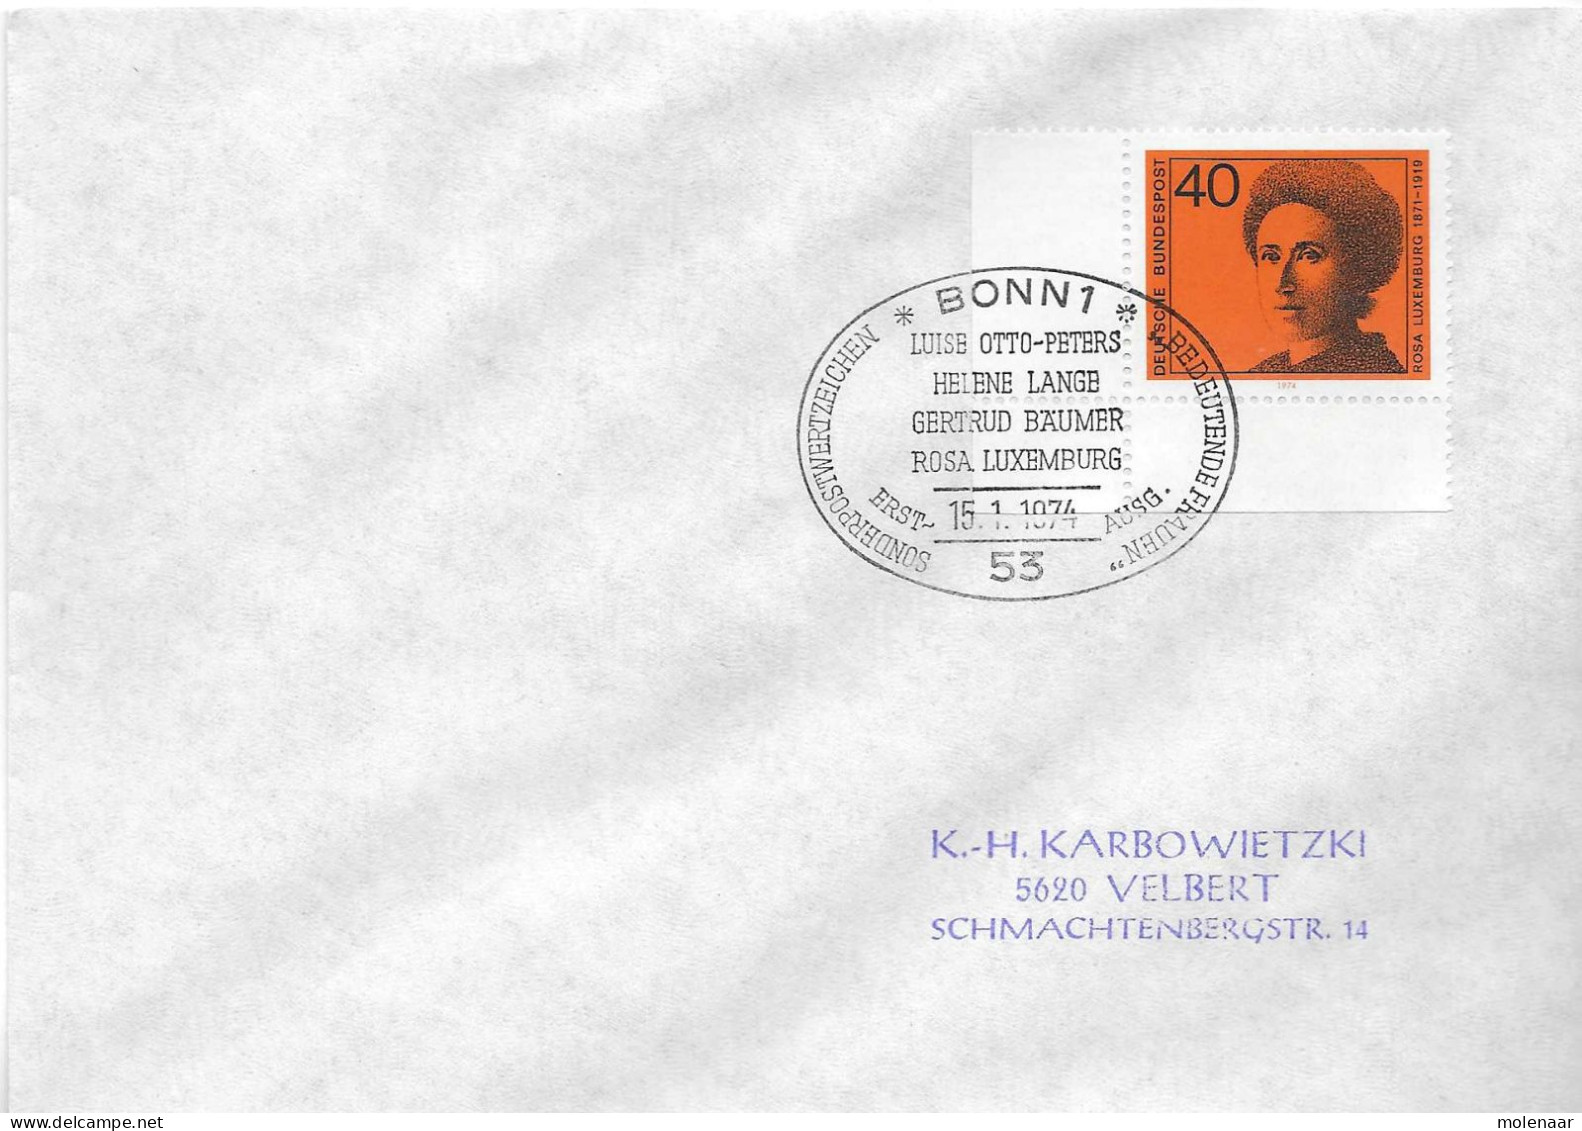 Postzegels > Europa > Duitsland > West-Duitsland > 1970-1979 > Brief Met No. 794 (17381) - Covers & Documents